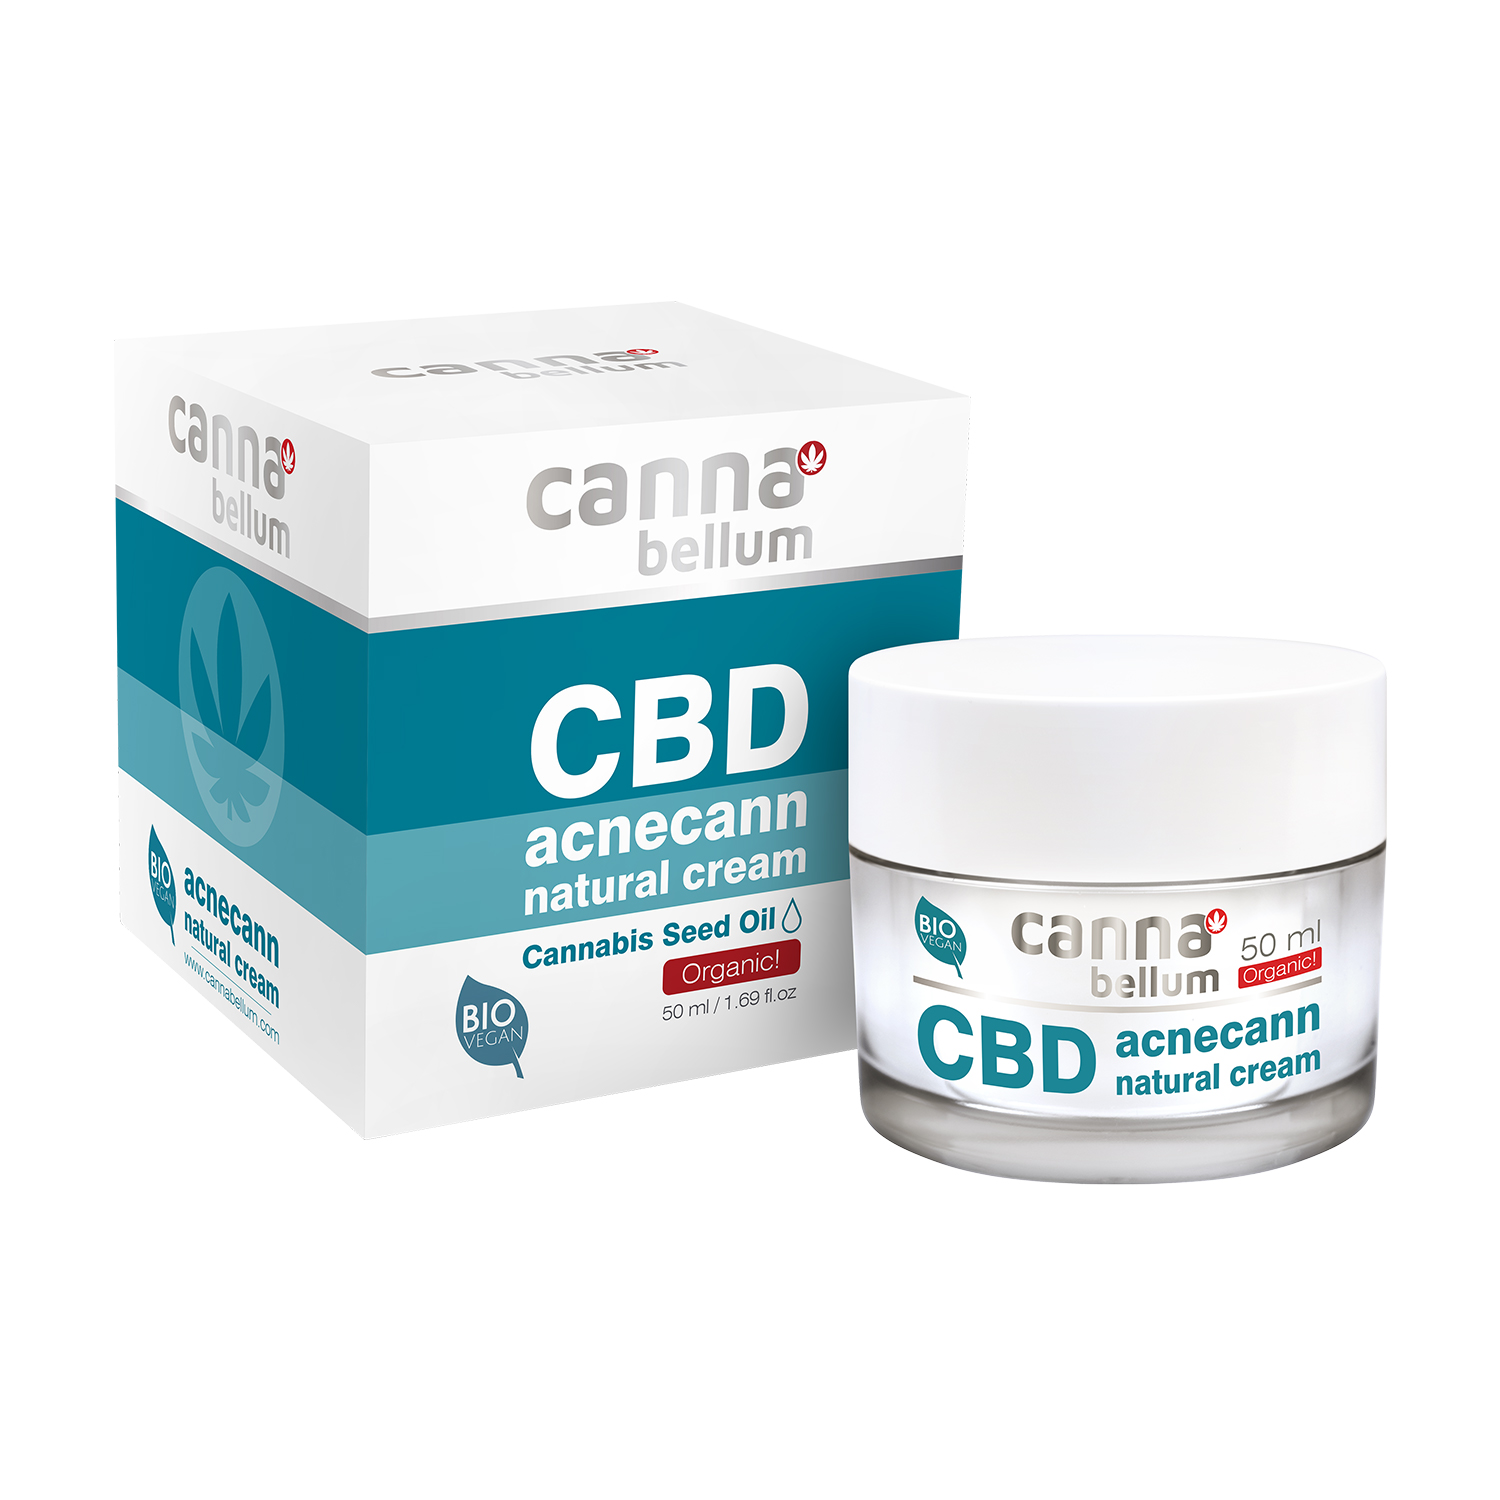 Cannabellum CBD acnecann natural cream 50ml P1244 komplet WEB 51